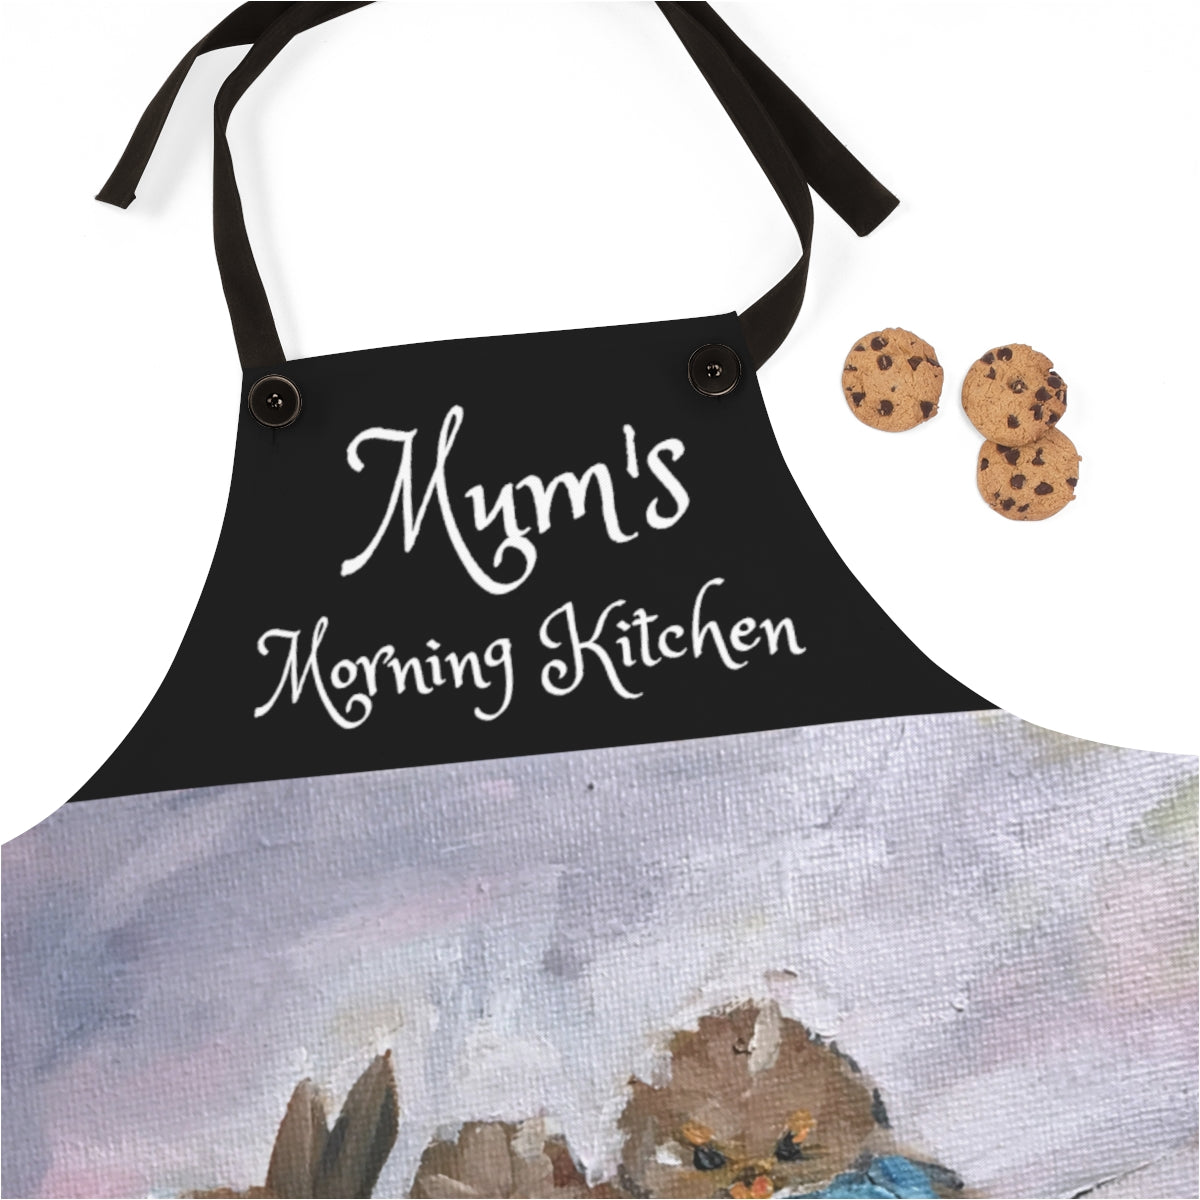 Mums Morning Kitchen Apron  funny grumpy Fairy Wren birds